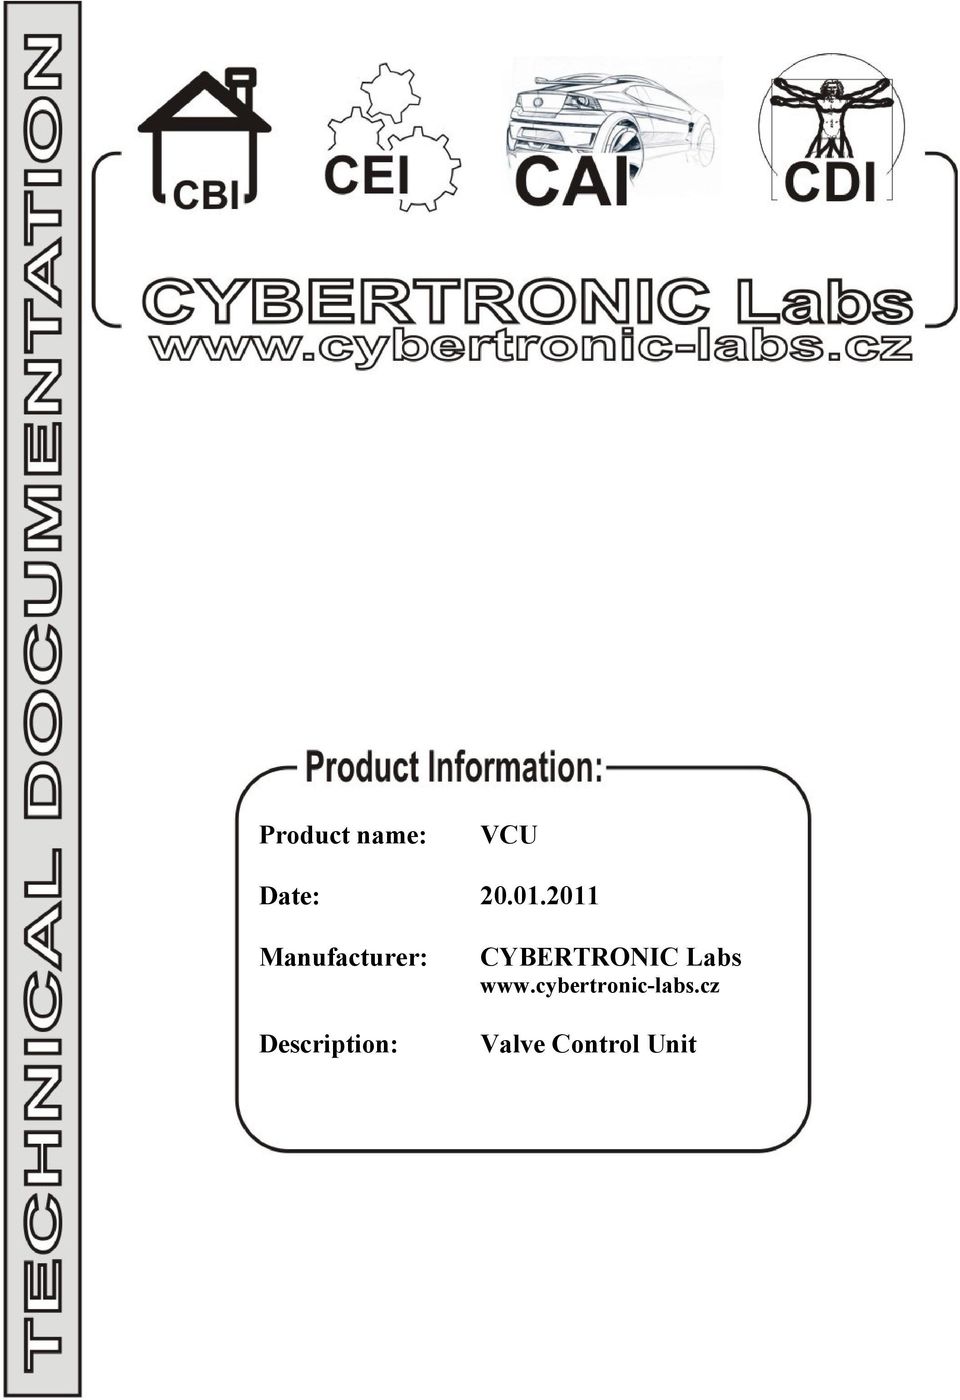 Description: CYBERTRONIC Labs